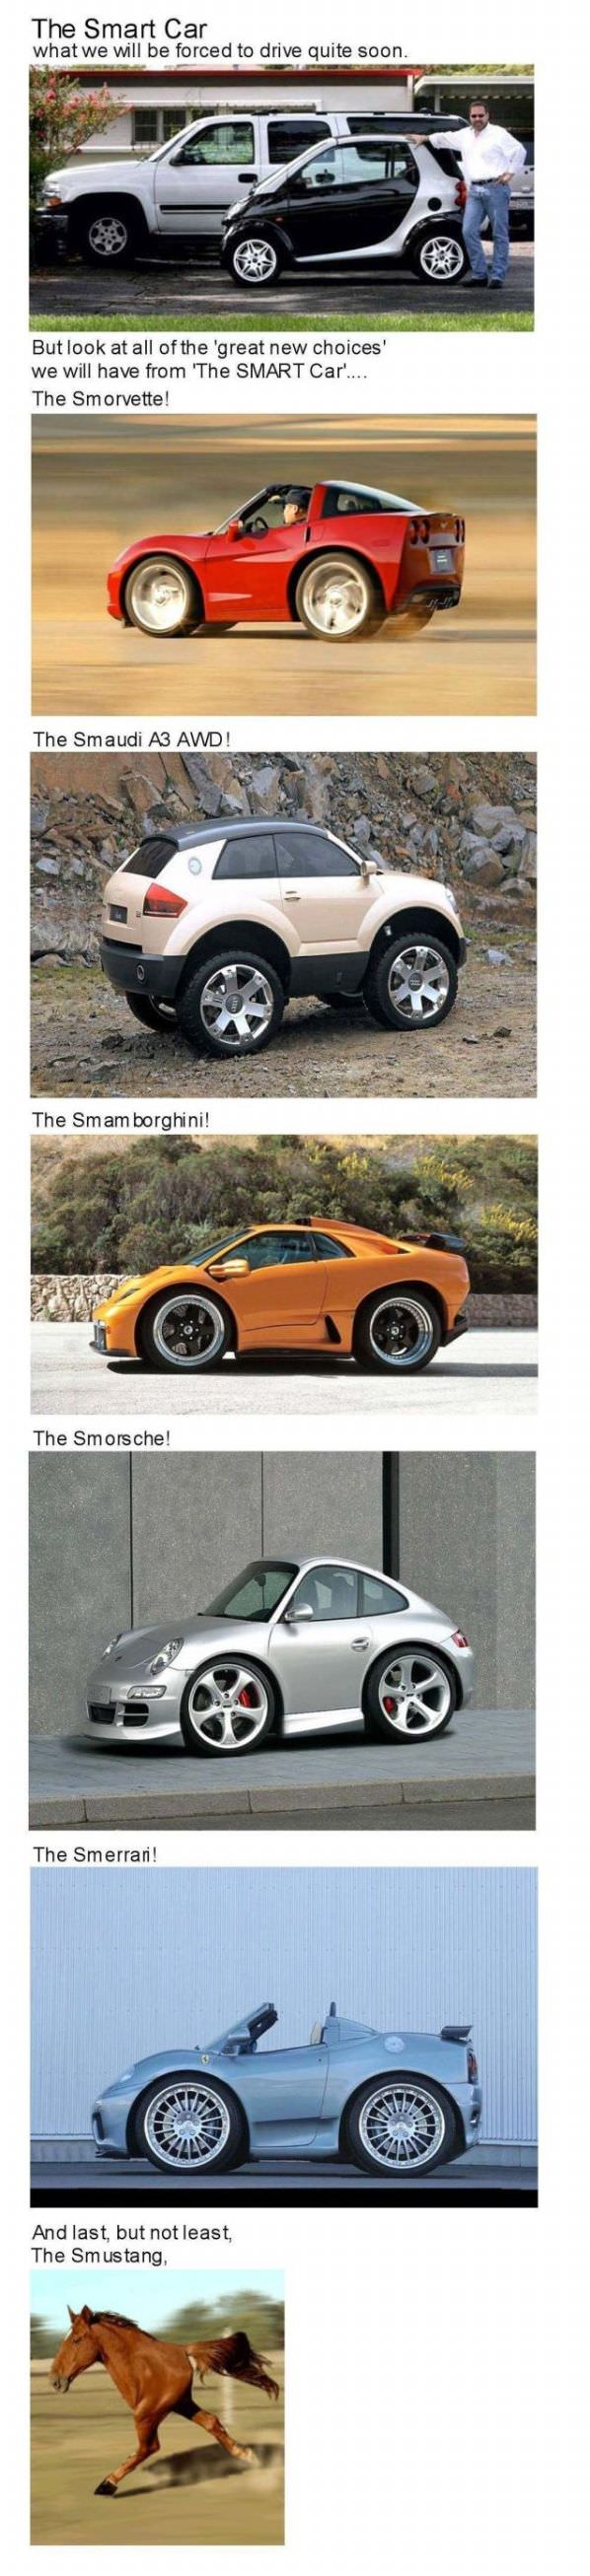 The Smart Car